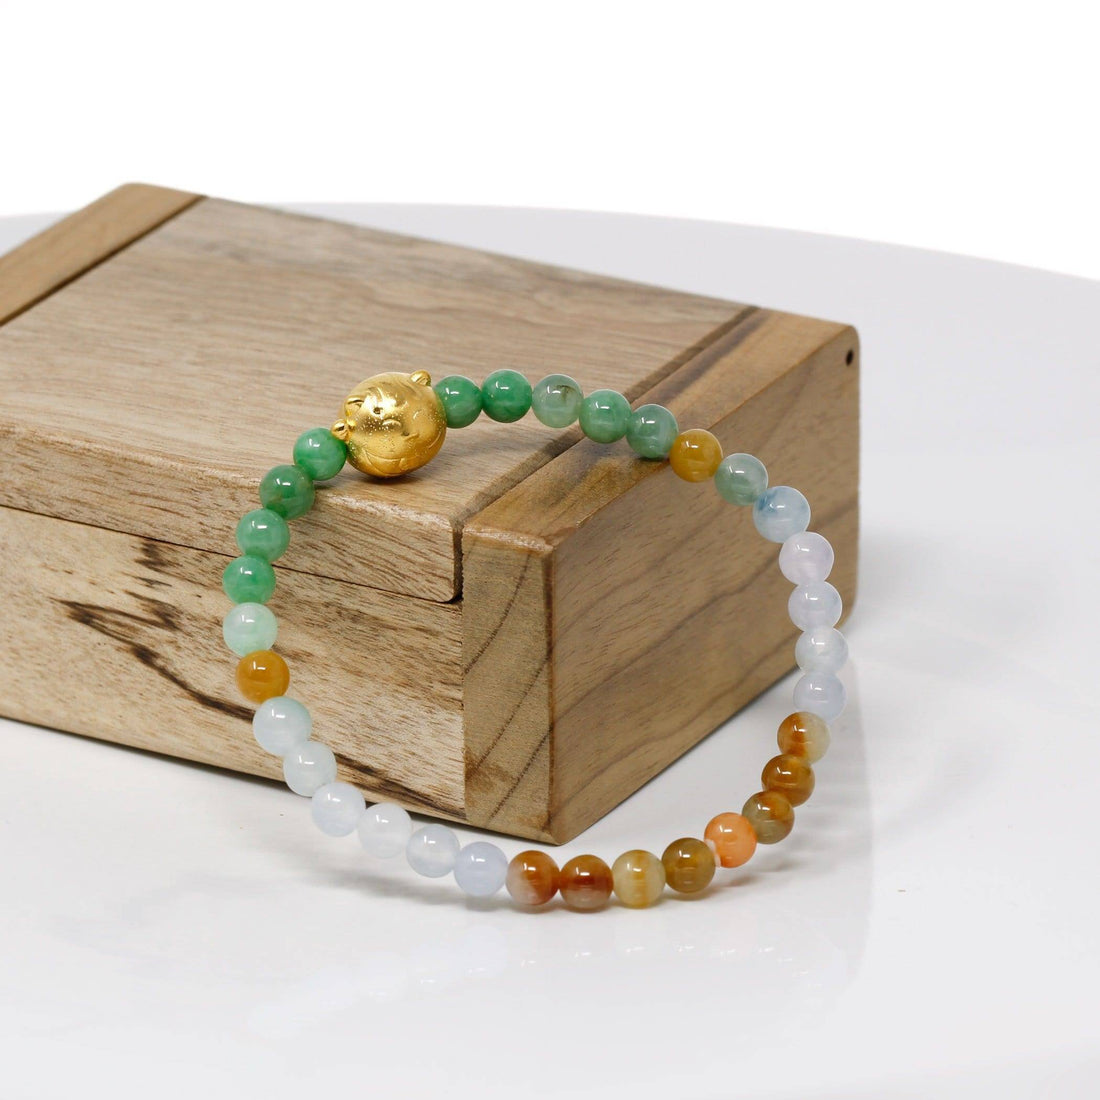 Baikalla Jewelry 24k Gold Jadeite Beads Bracelet XS 6 Inches Genuine High-quality Jade Jadeite Colorful Bracelet Bangle with 24k Yellow Gold Cat Charm #413